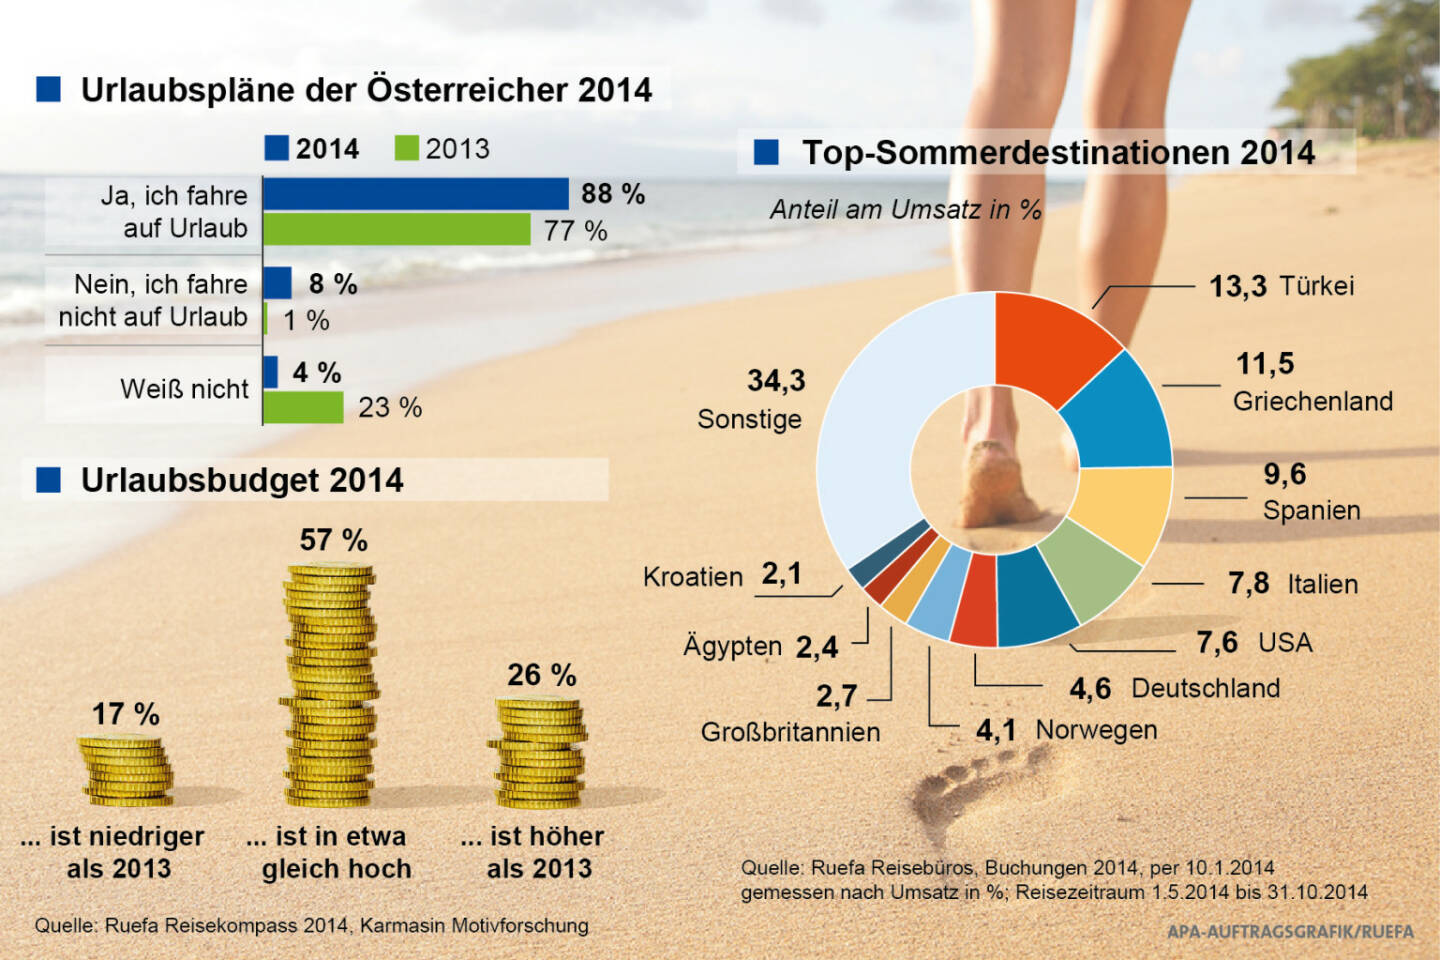 Ruefa Reisekompass 2014: Urlaub liegt bei den Österreichern hoch im Kurs (Grafik: APA, Aussendung)